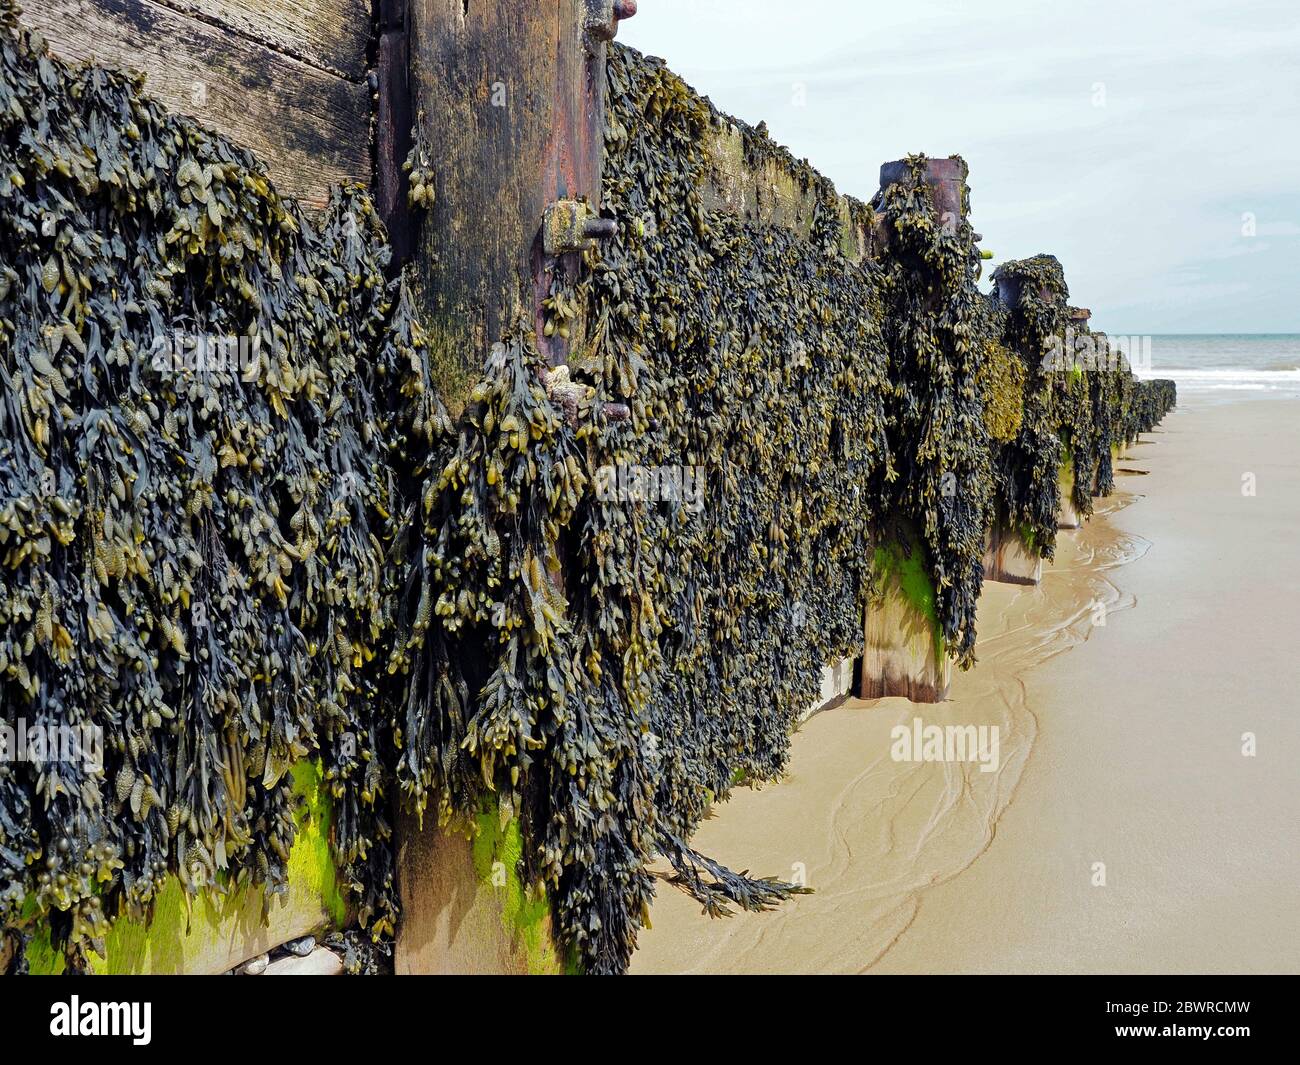 Bladder wrack or Brown Kelp is a common seaweed often found growing on coastal defence groynes in the inter-tidal zone as here in Cromer, Norfolk. Stock Photo